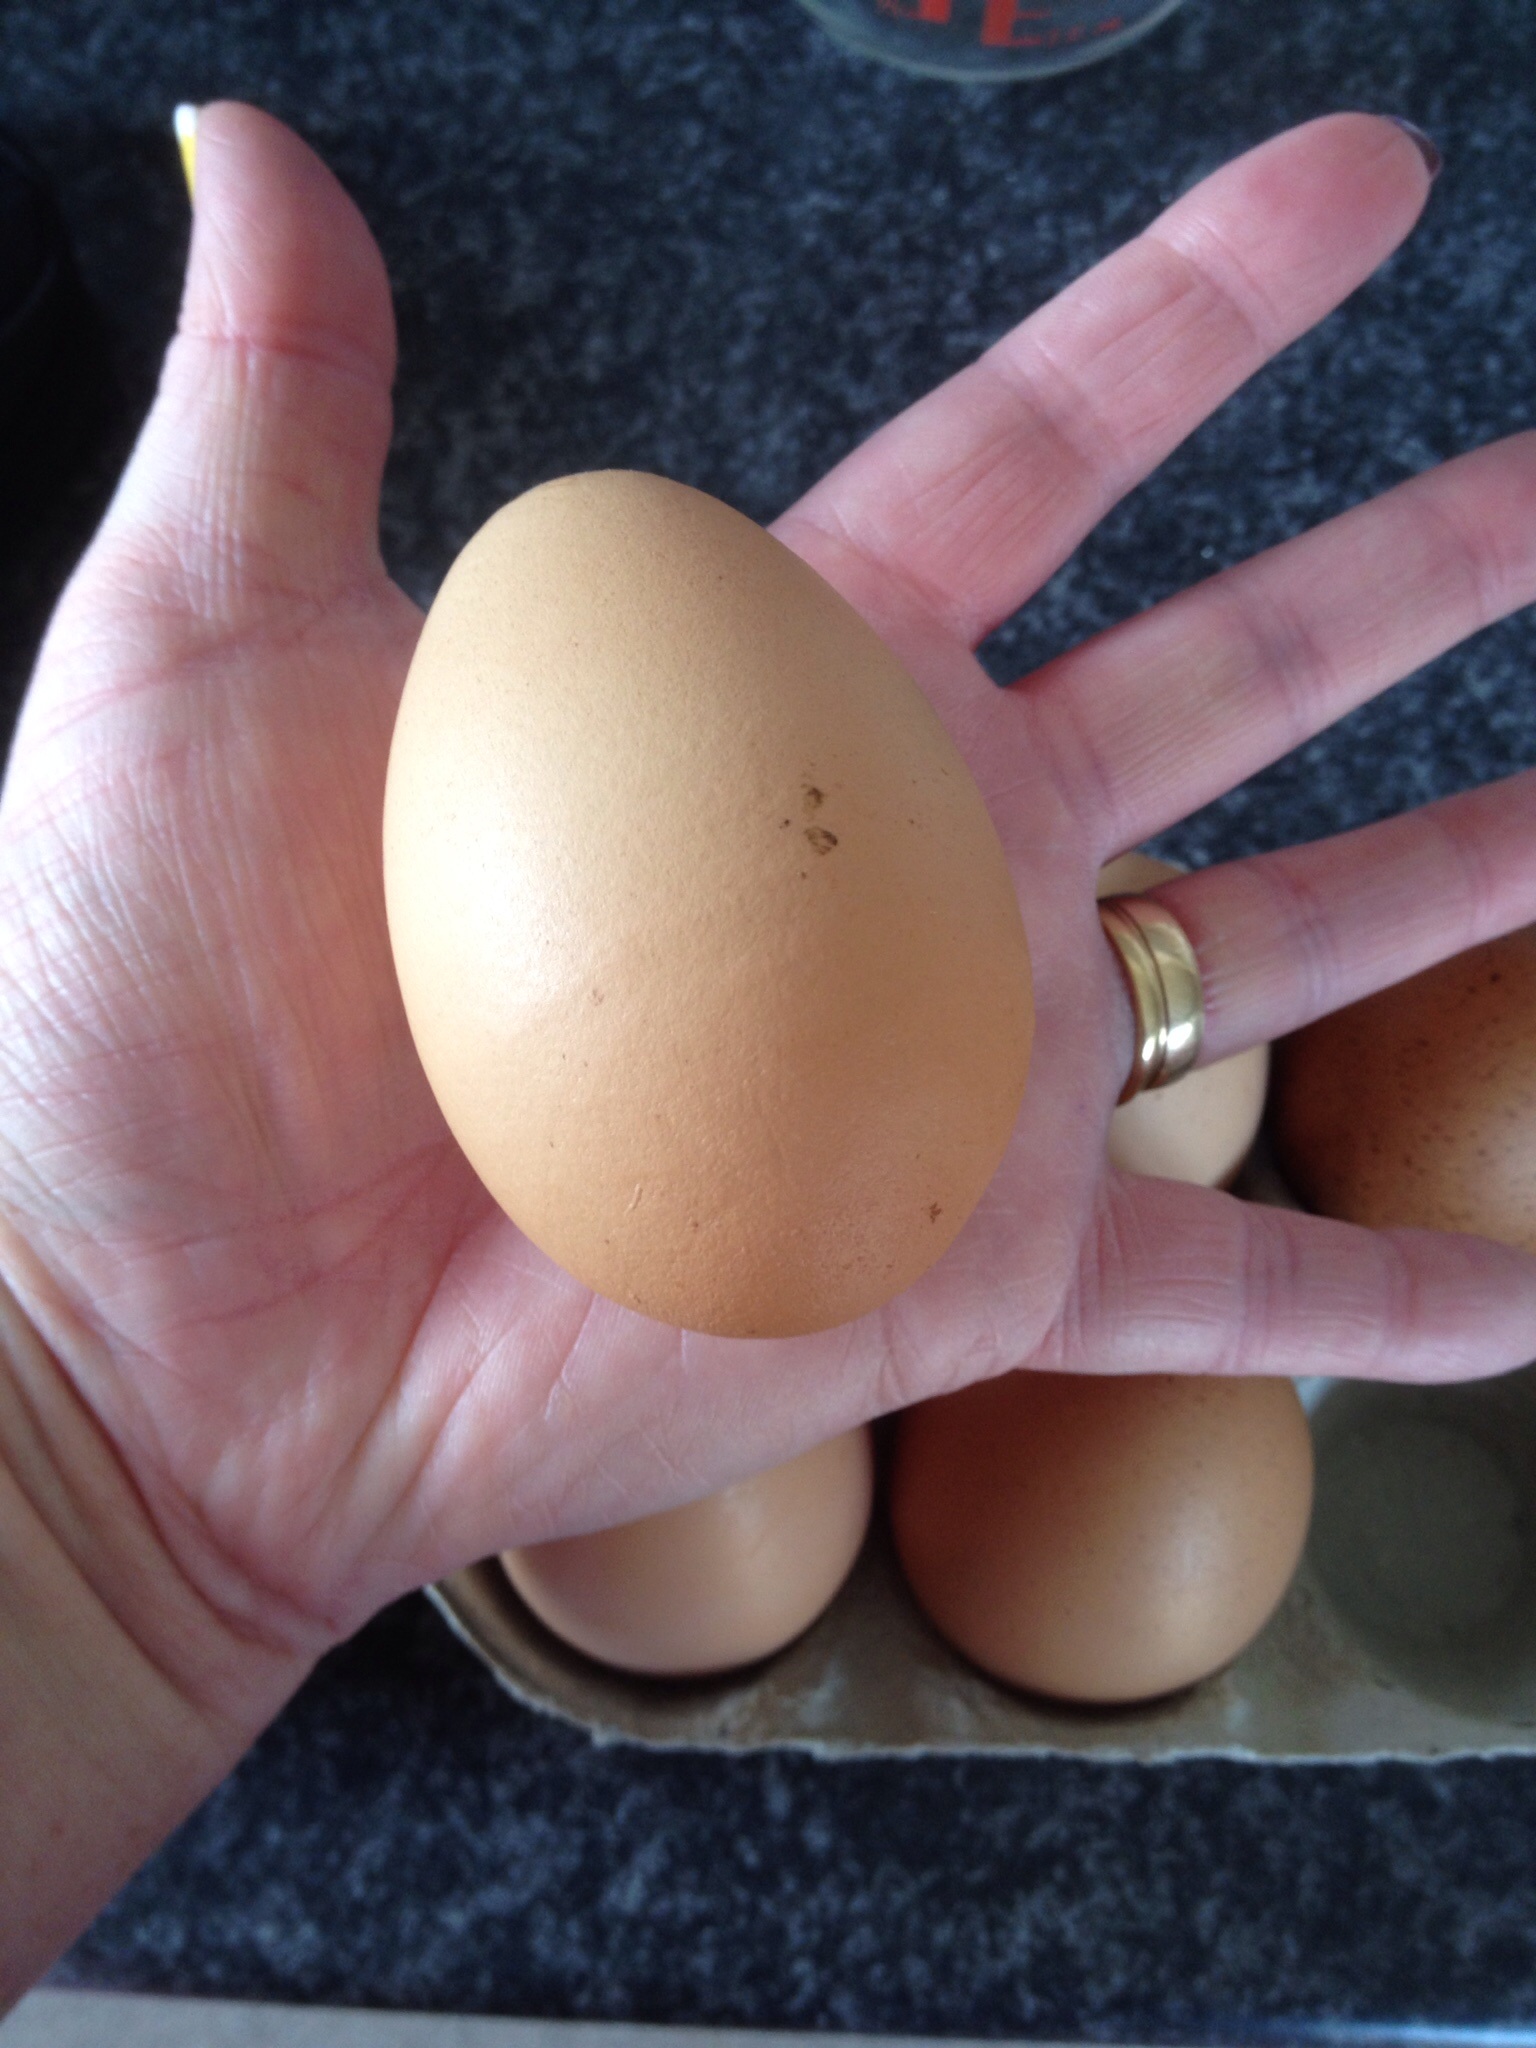 Rachel Sturman-Panter's Rhode Island Reds lay wonderful giant eggs